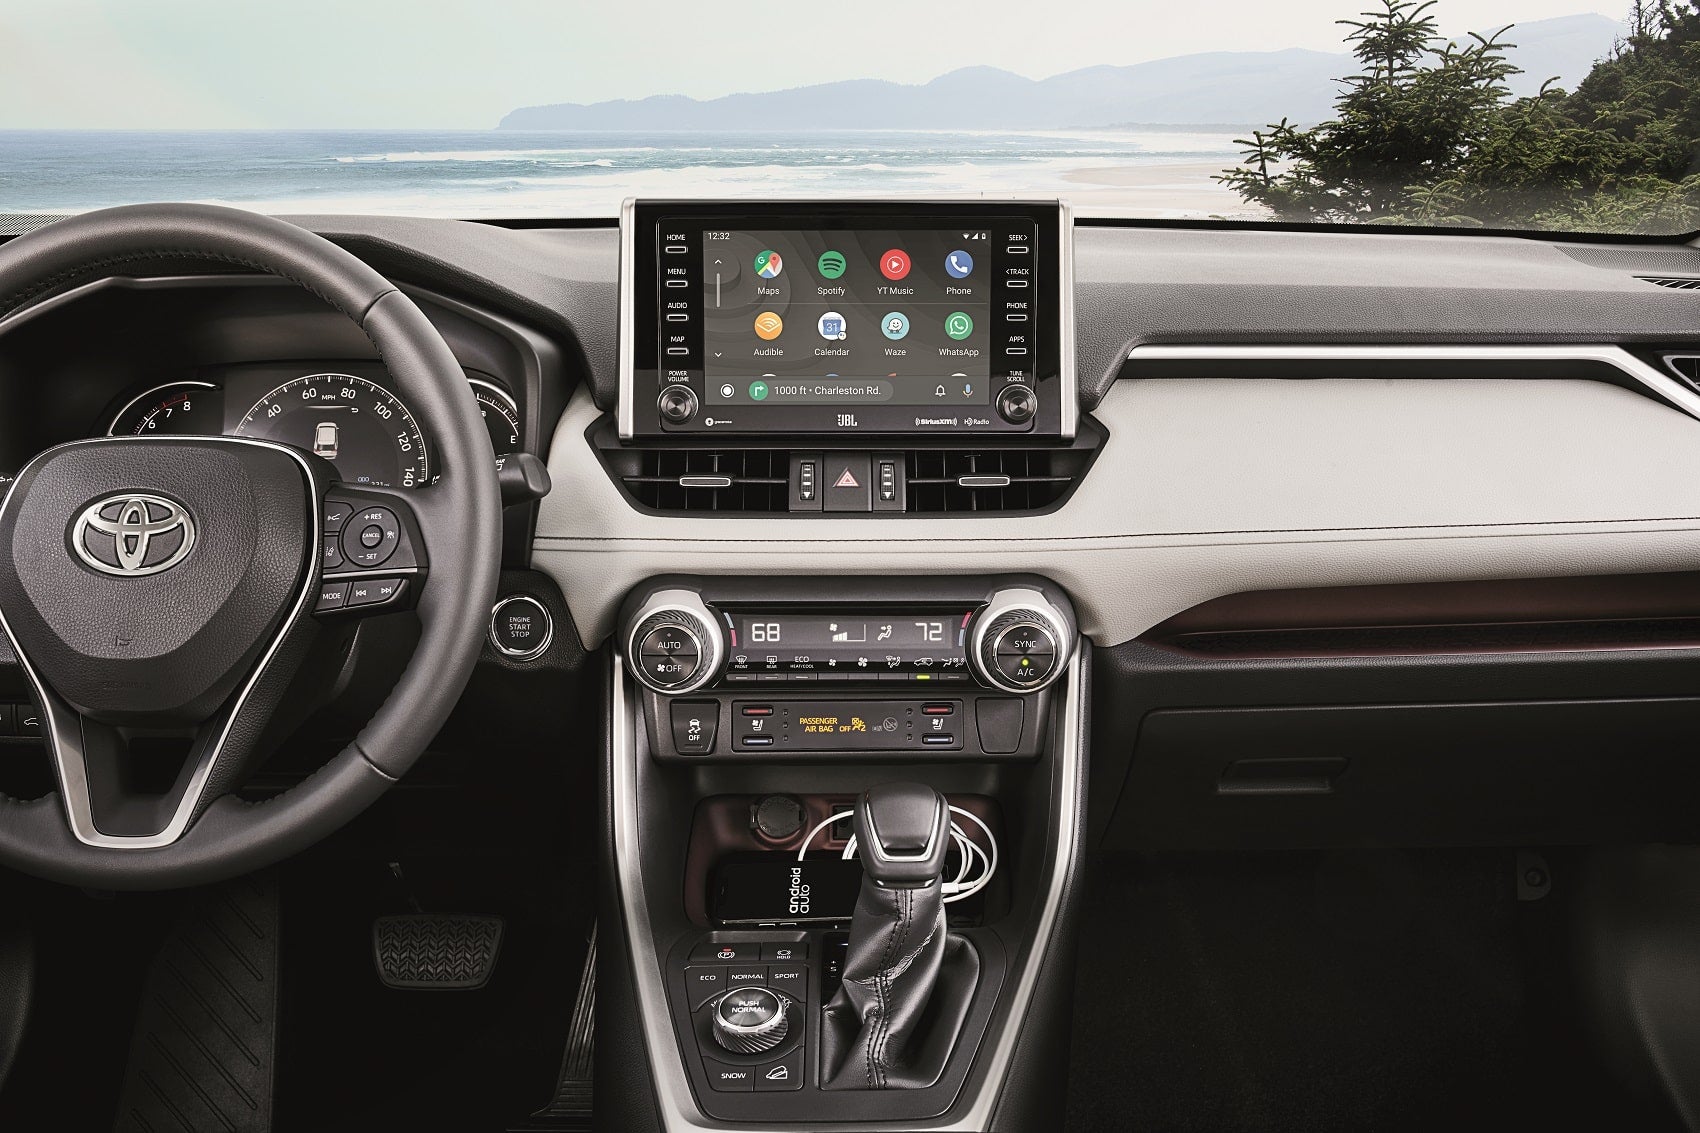 Toyota RAV4 Interior with Android Auto™ Technology